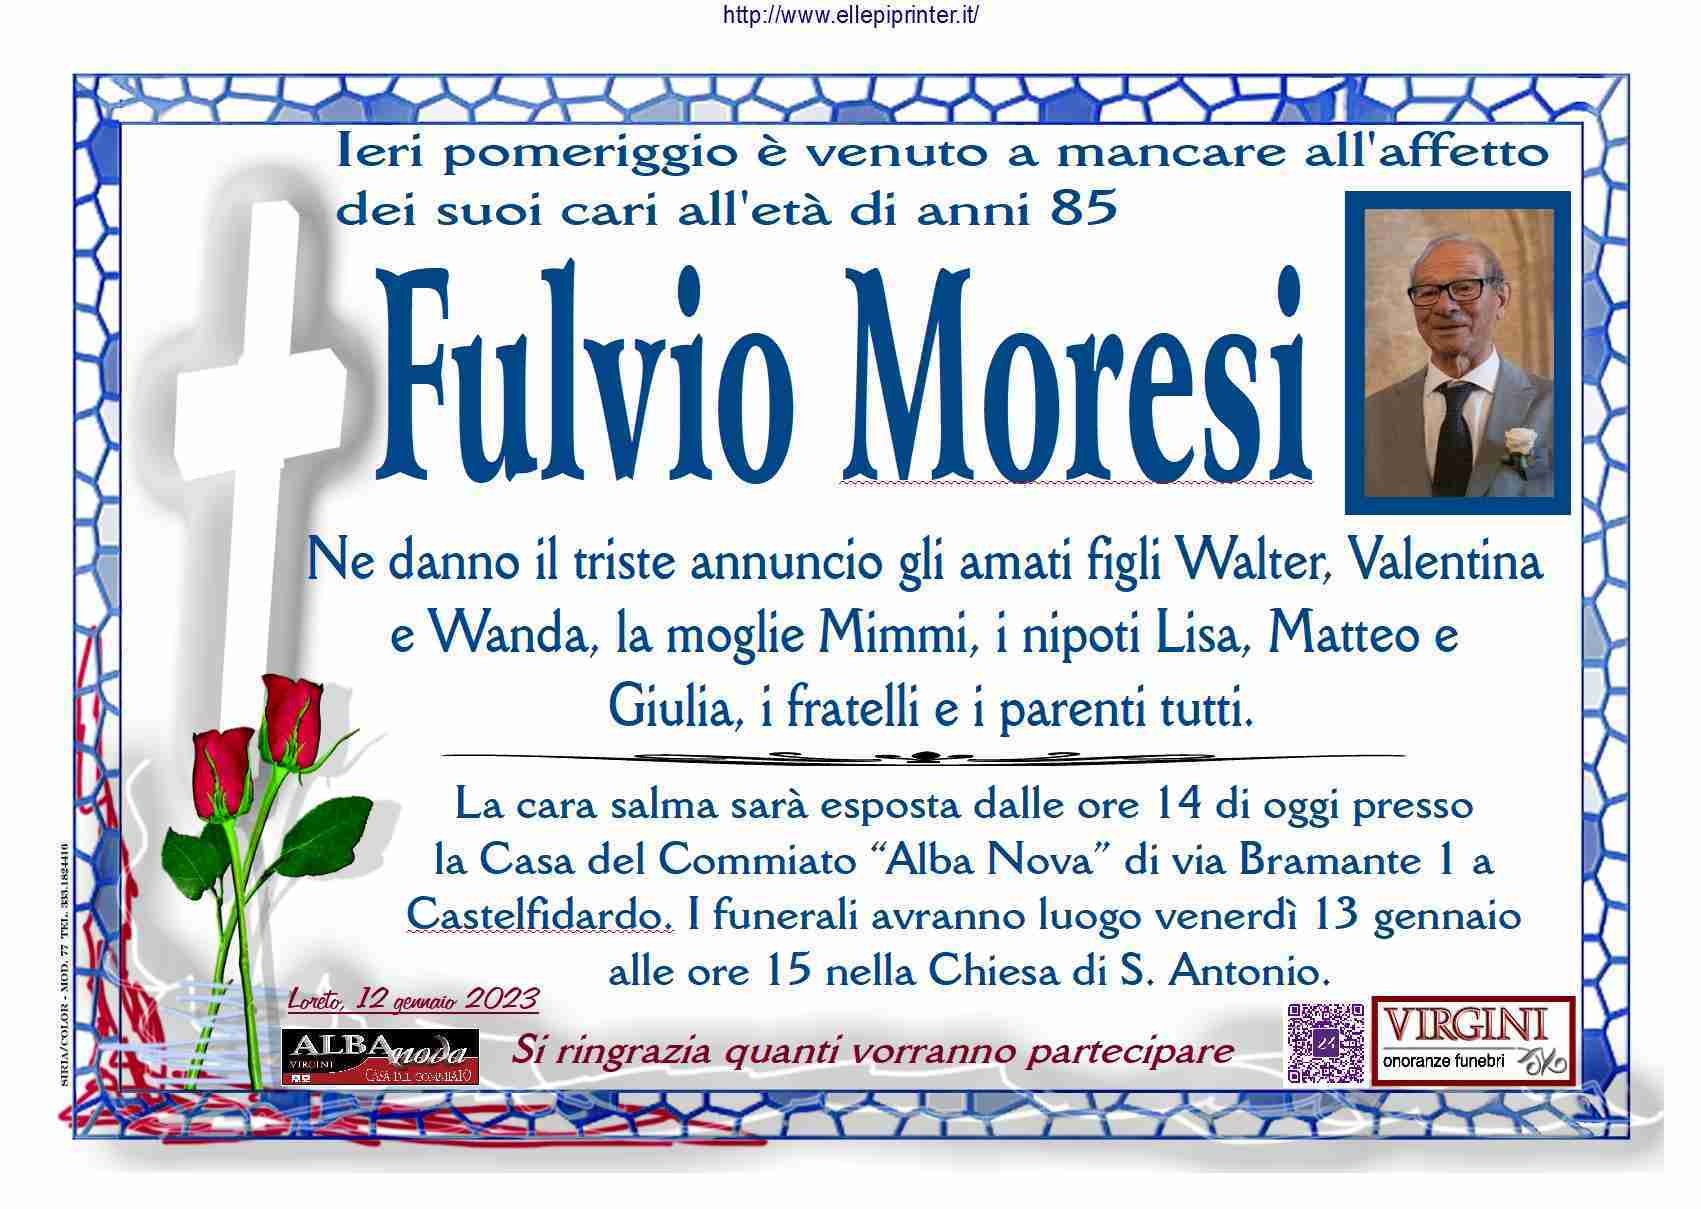 Fulvio Moresi